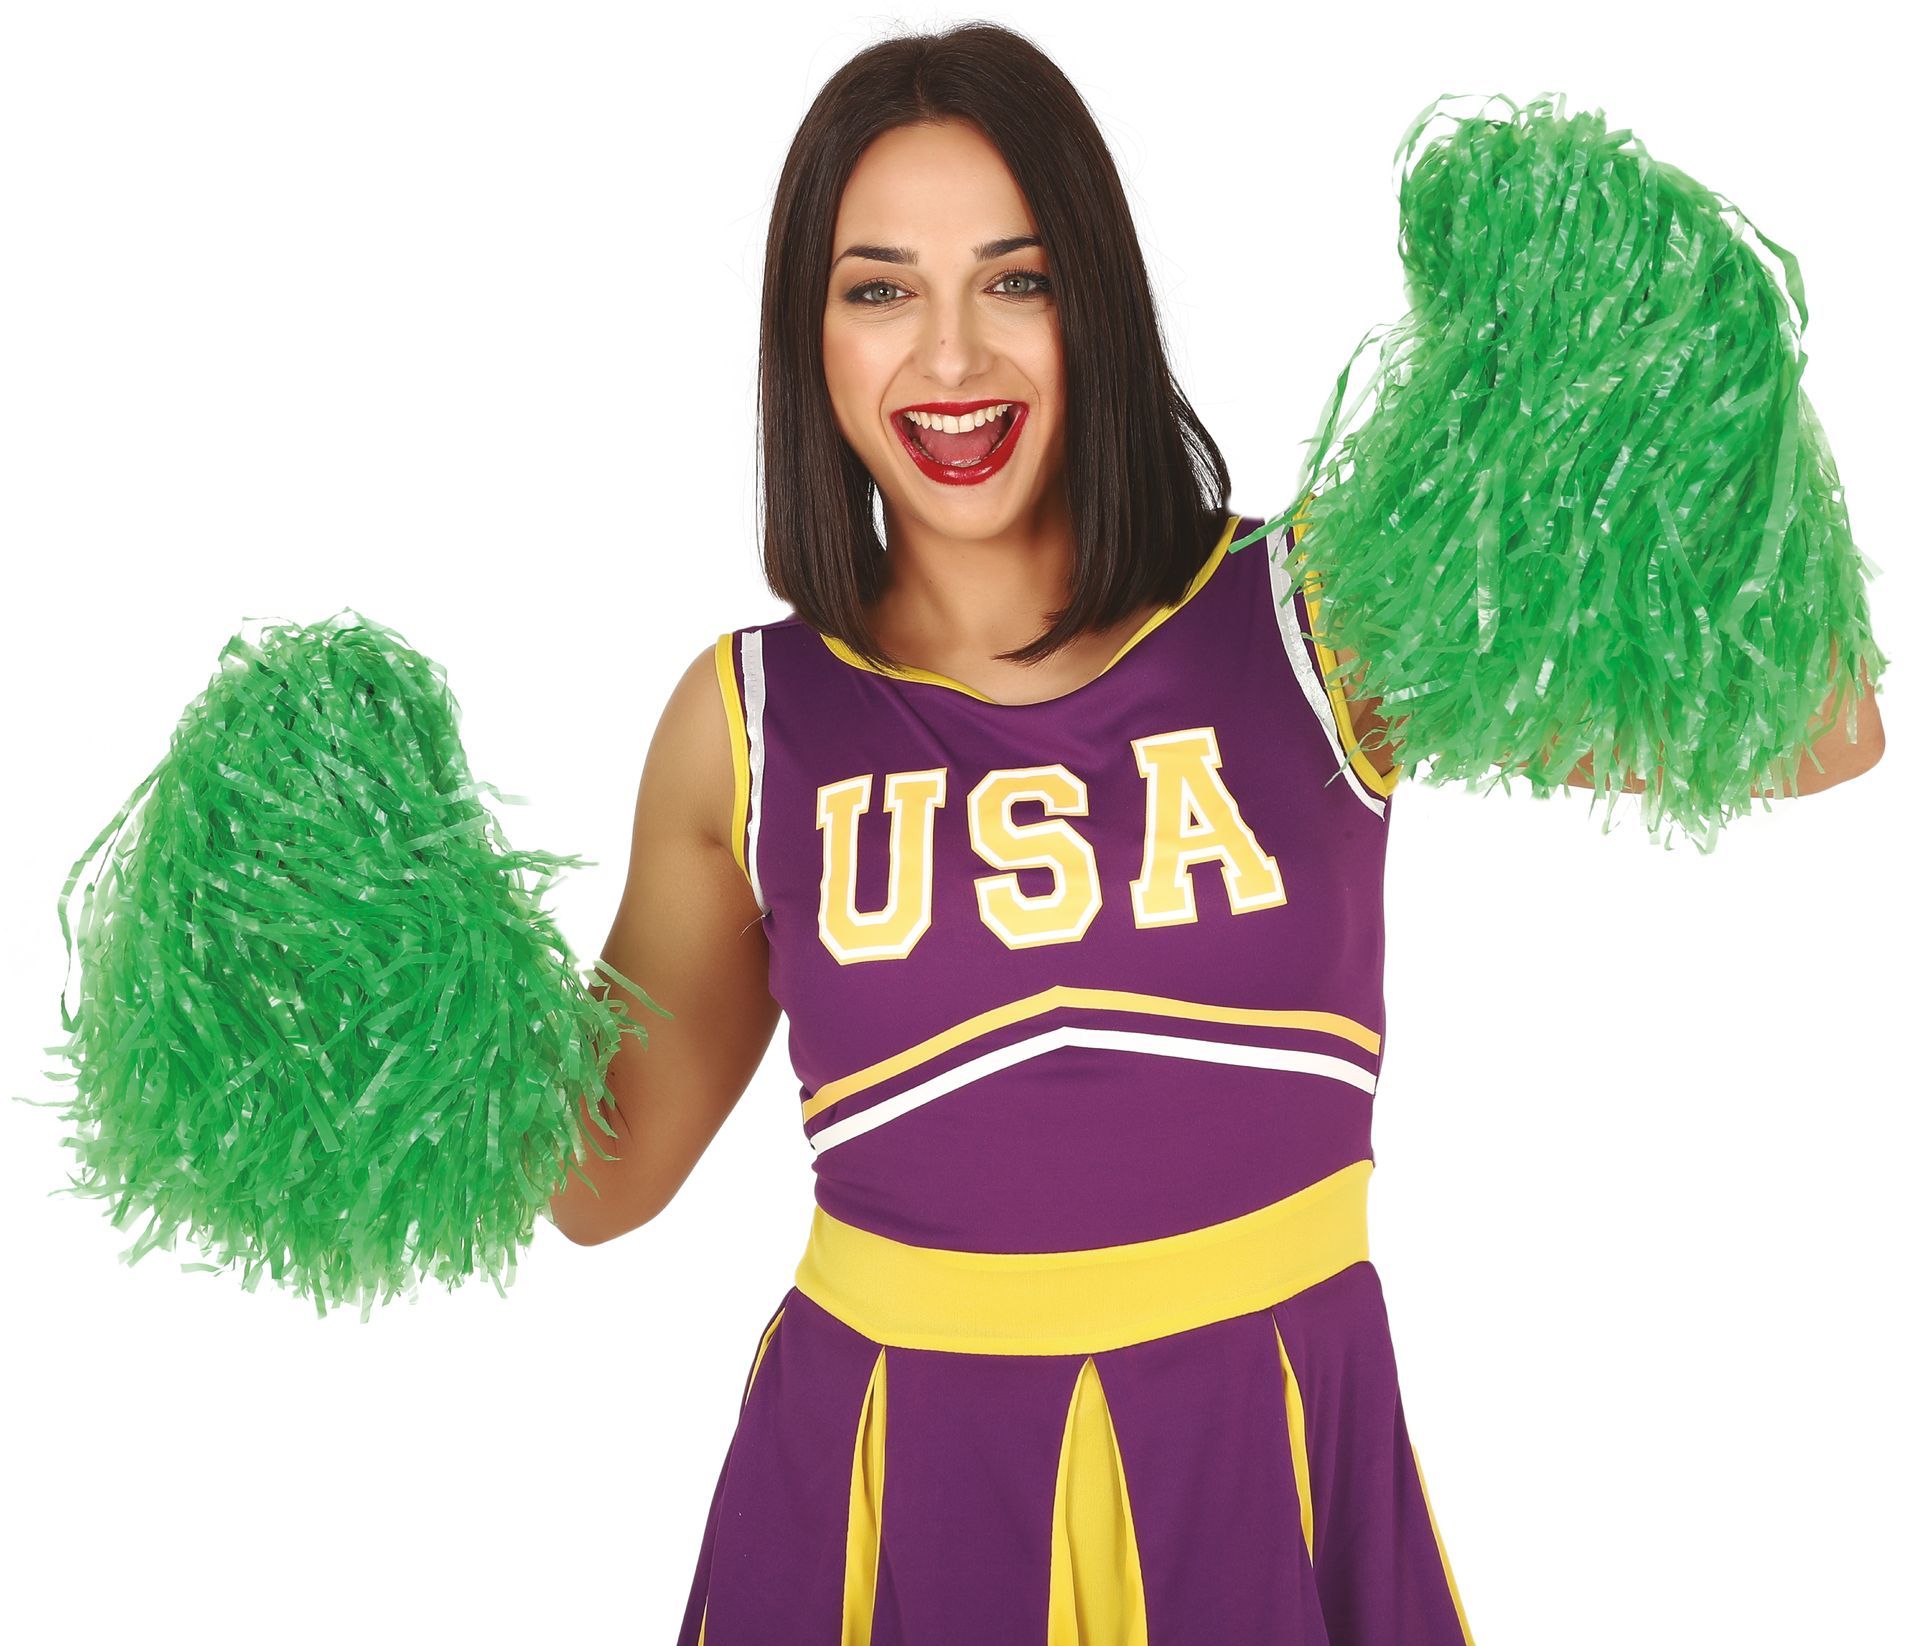 Pom pom cheerleader groen